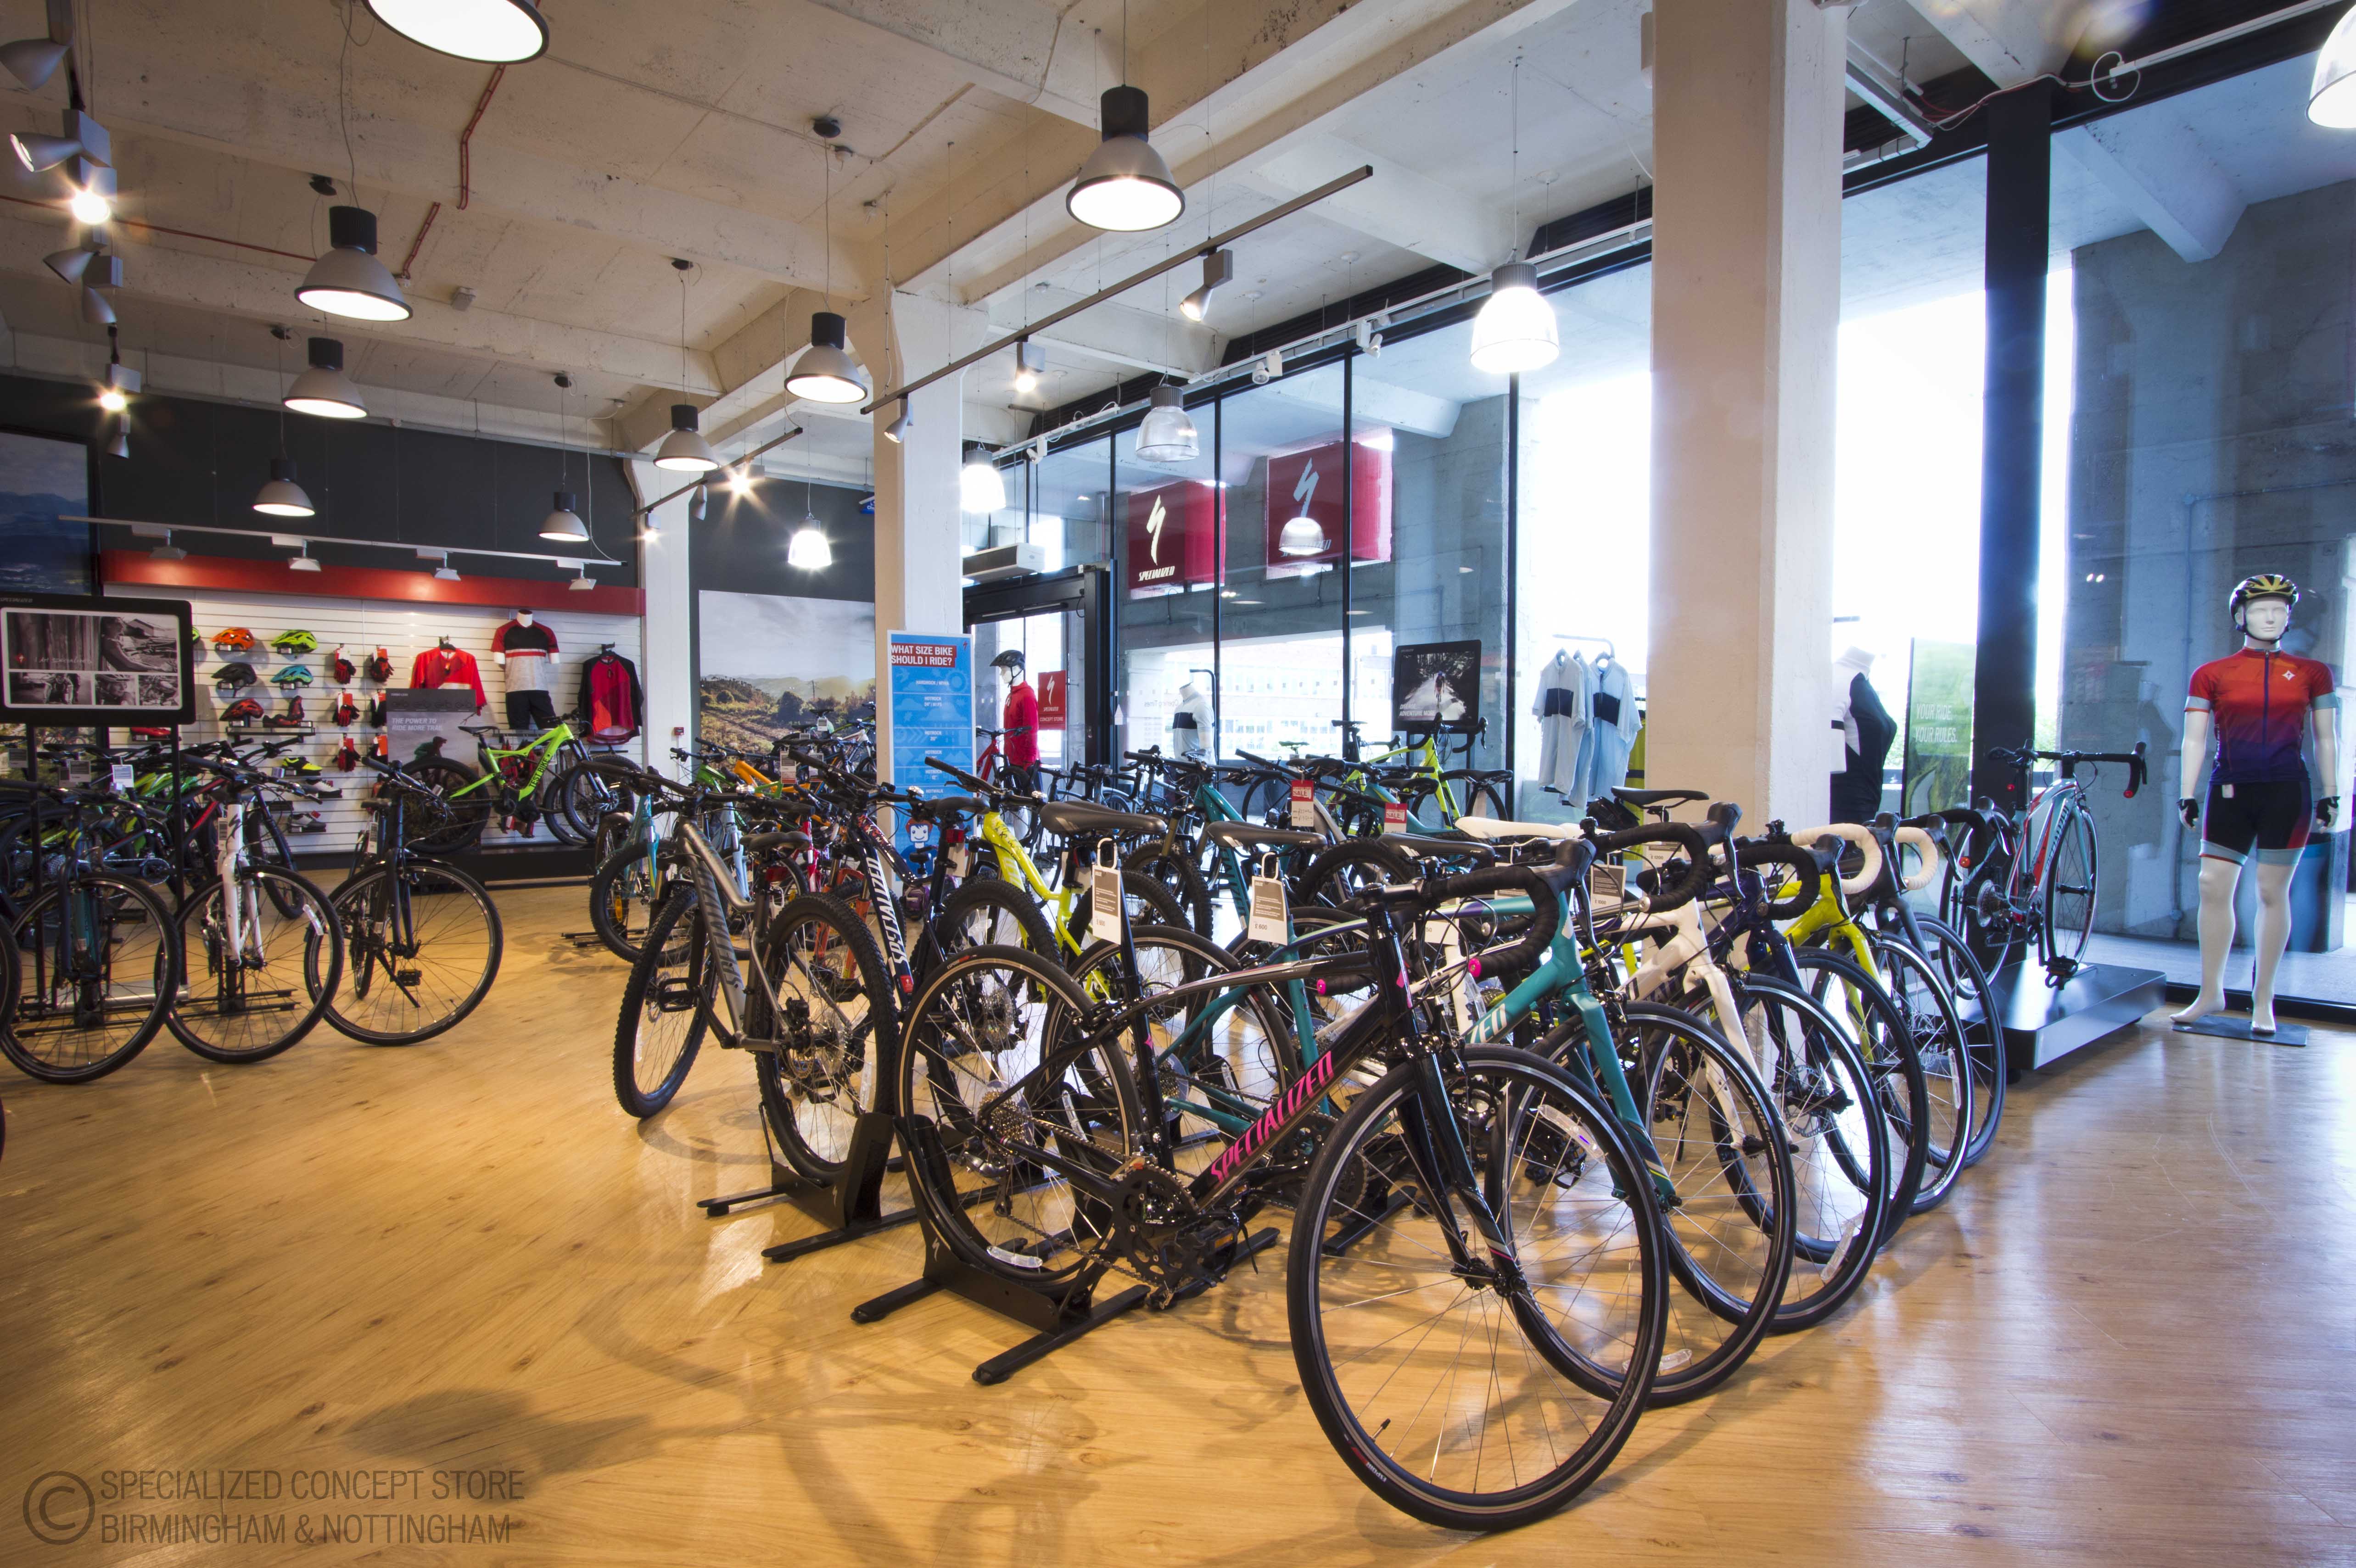 Birmingham Specialized Concept Store - Bike Shop in Birmingham